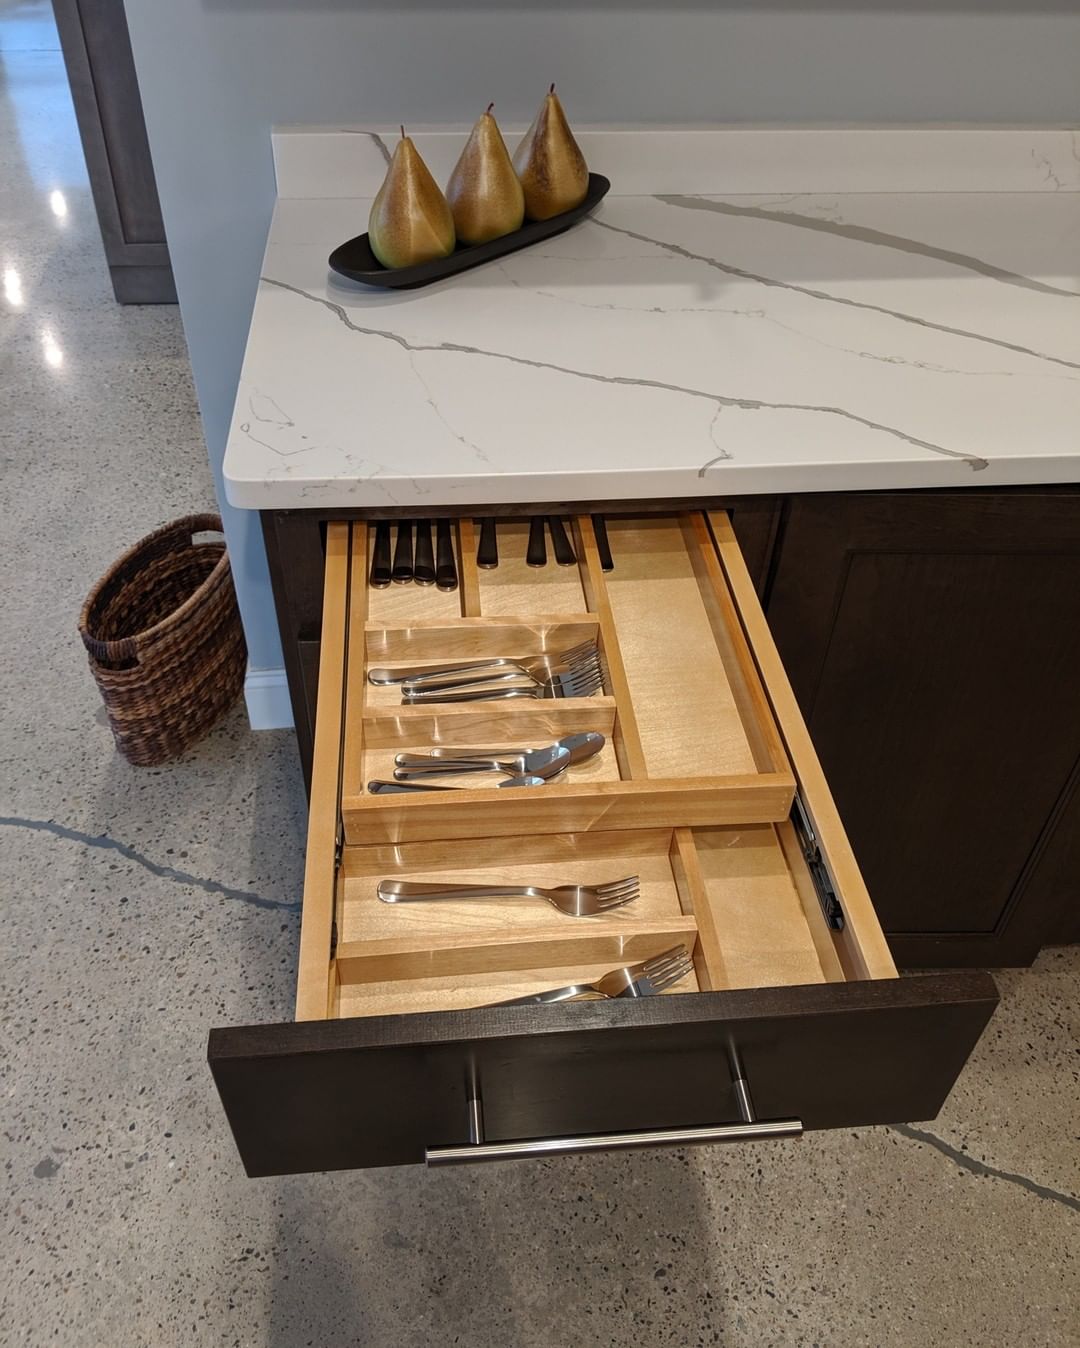 Kitchen drawer with double sliding drawer for utensils. Photo by Instagram user @benchmarkkitchenandbath